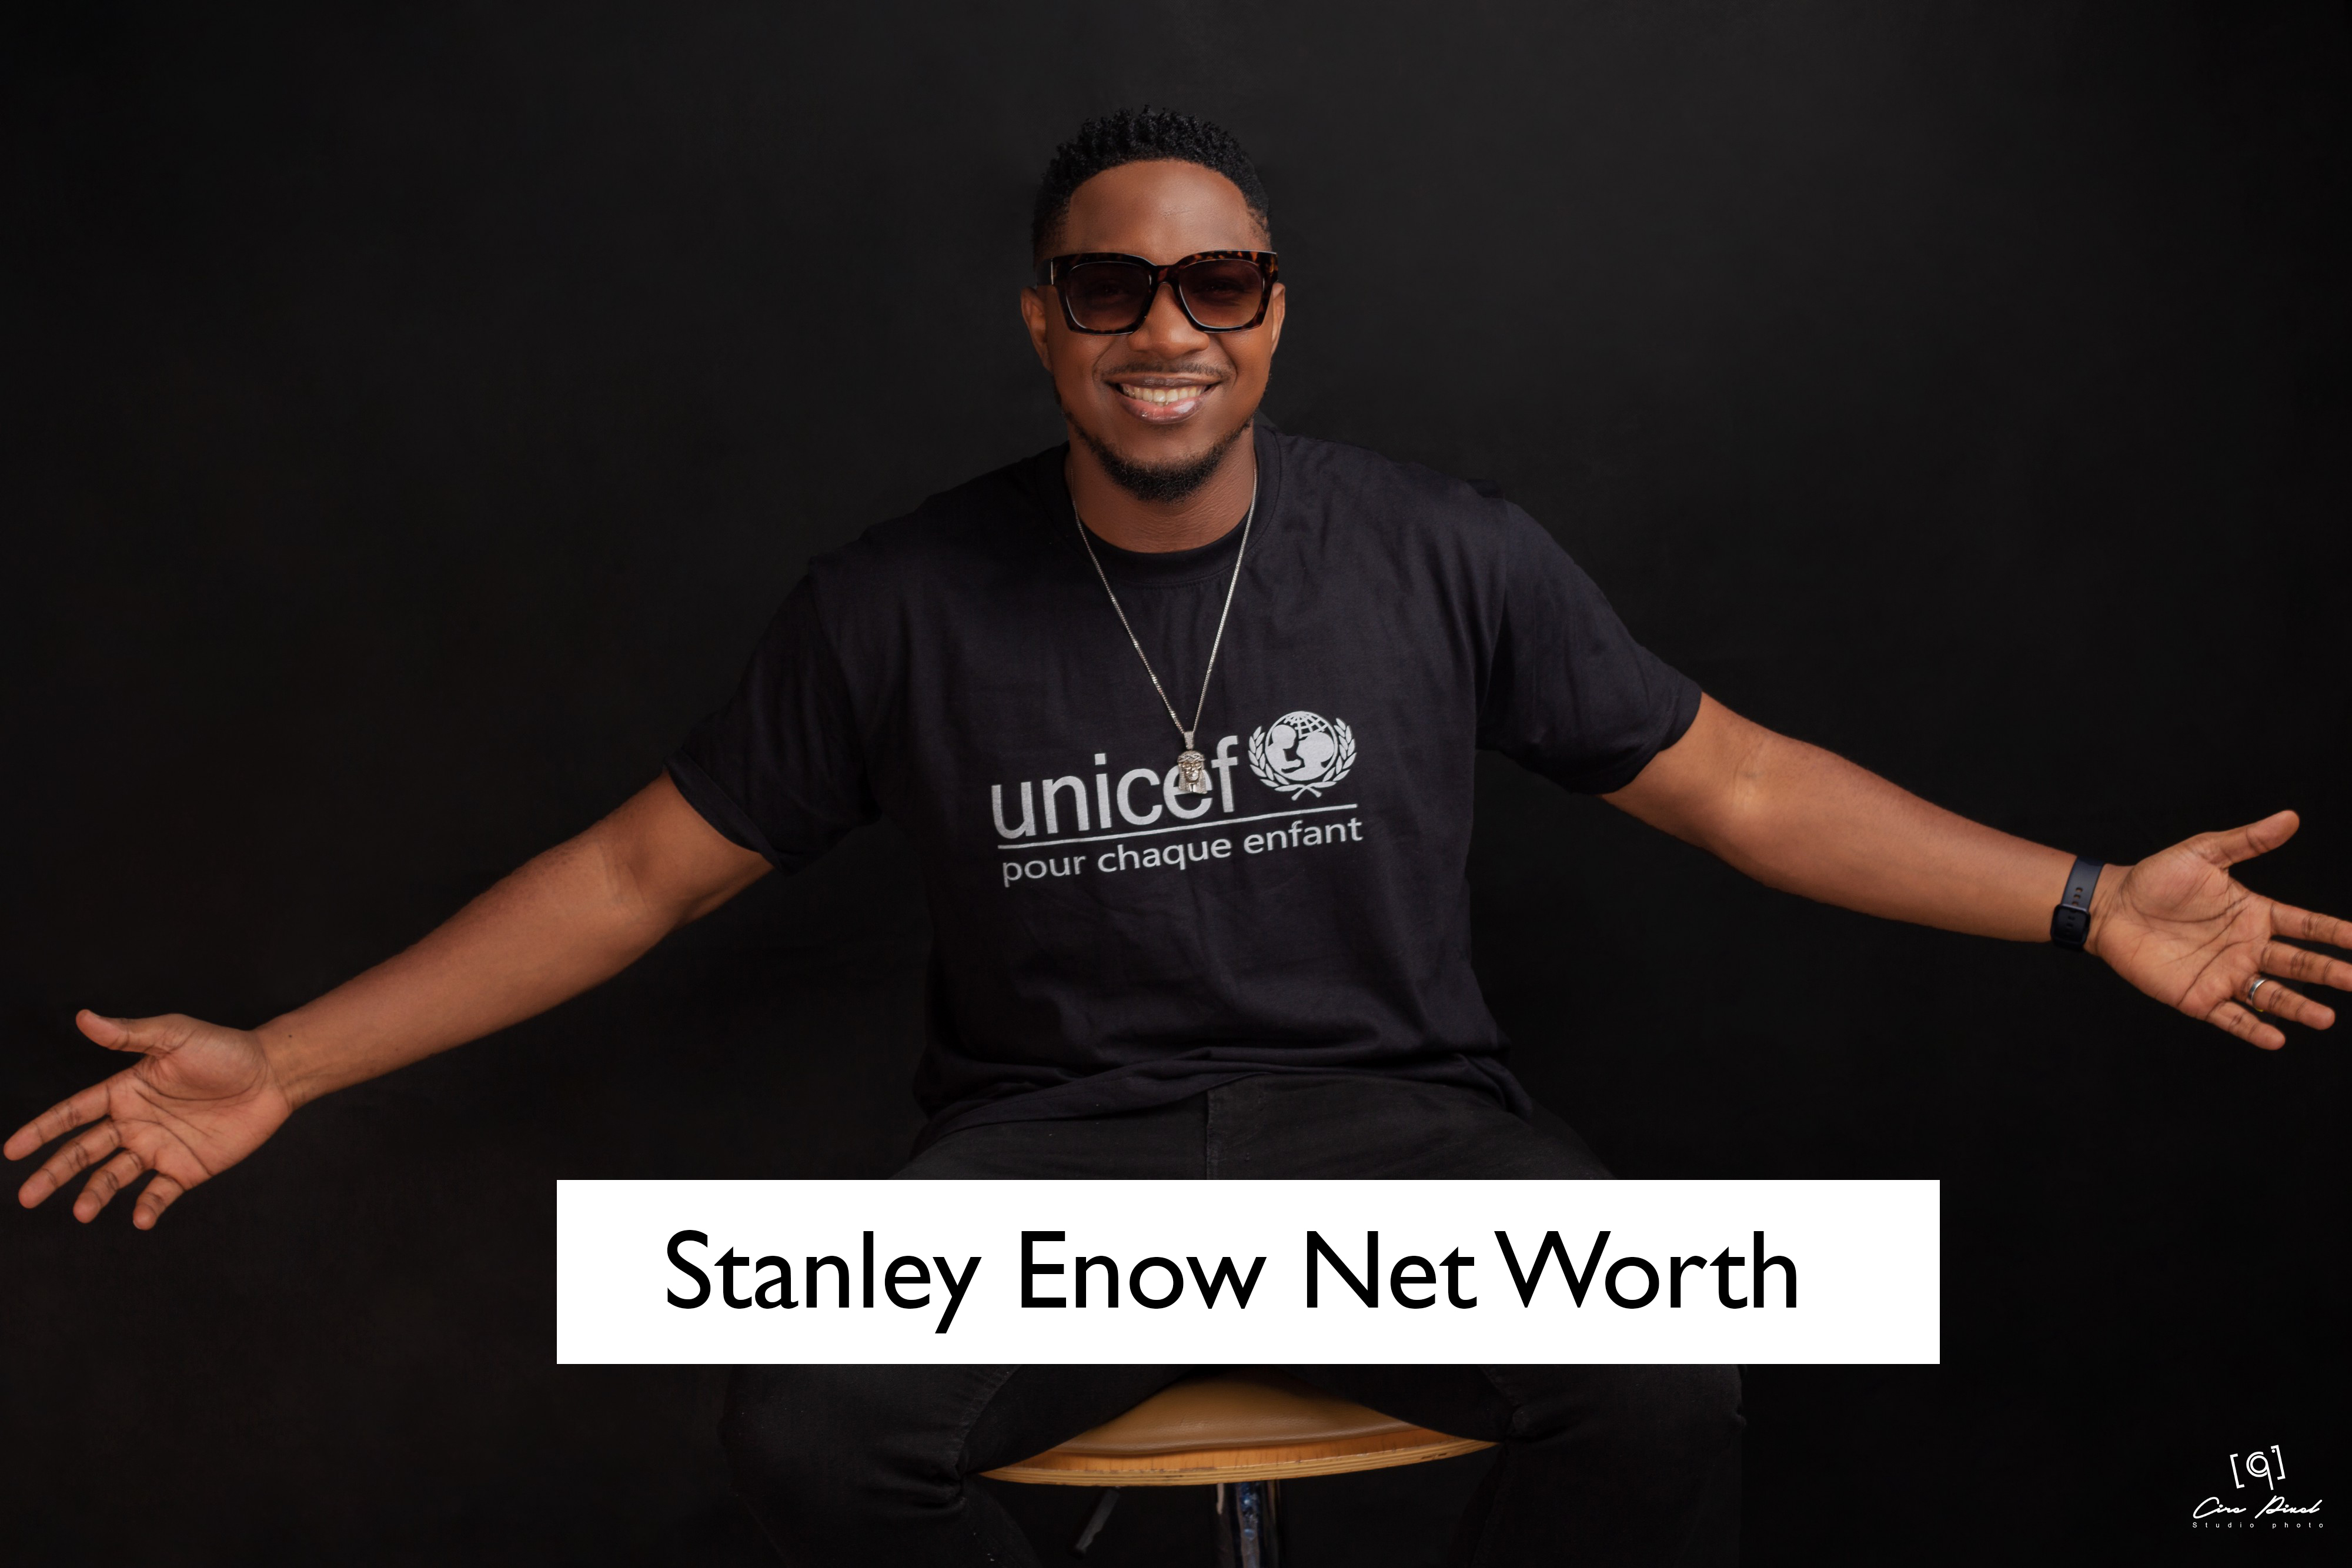 Stanley Enow Net Worth